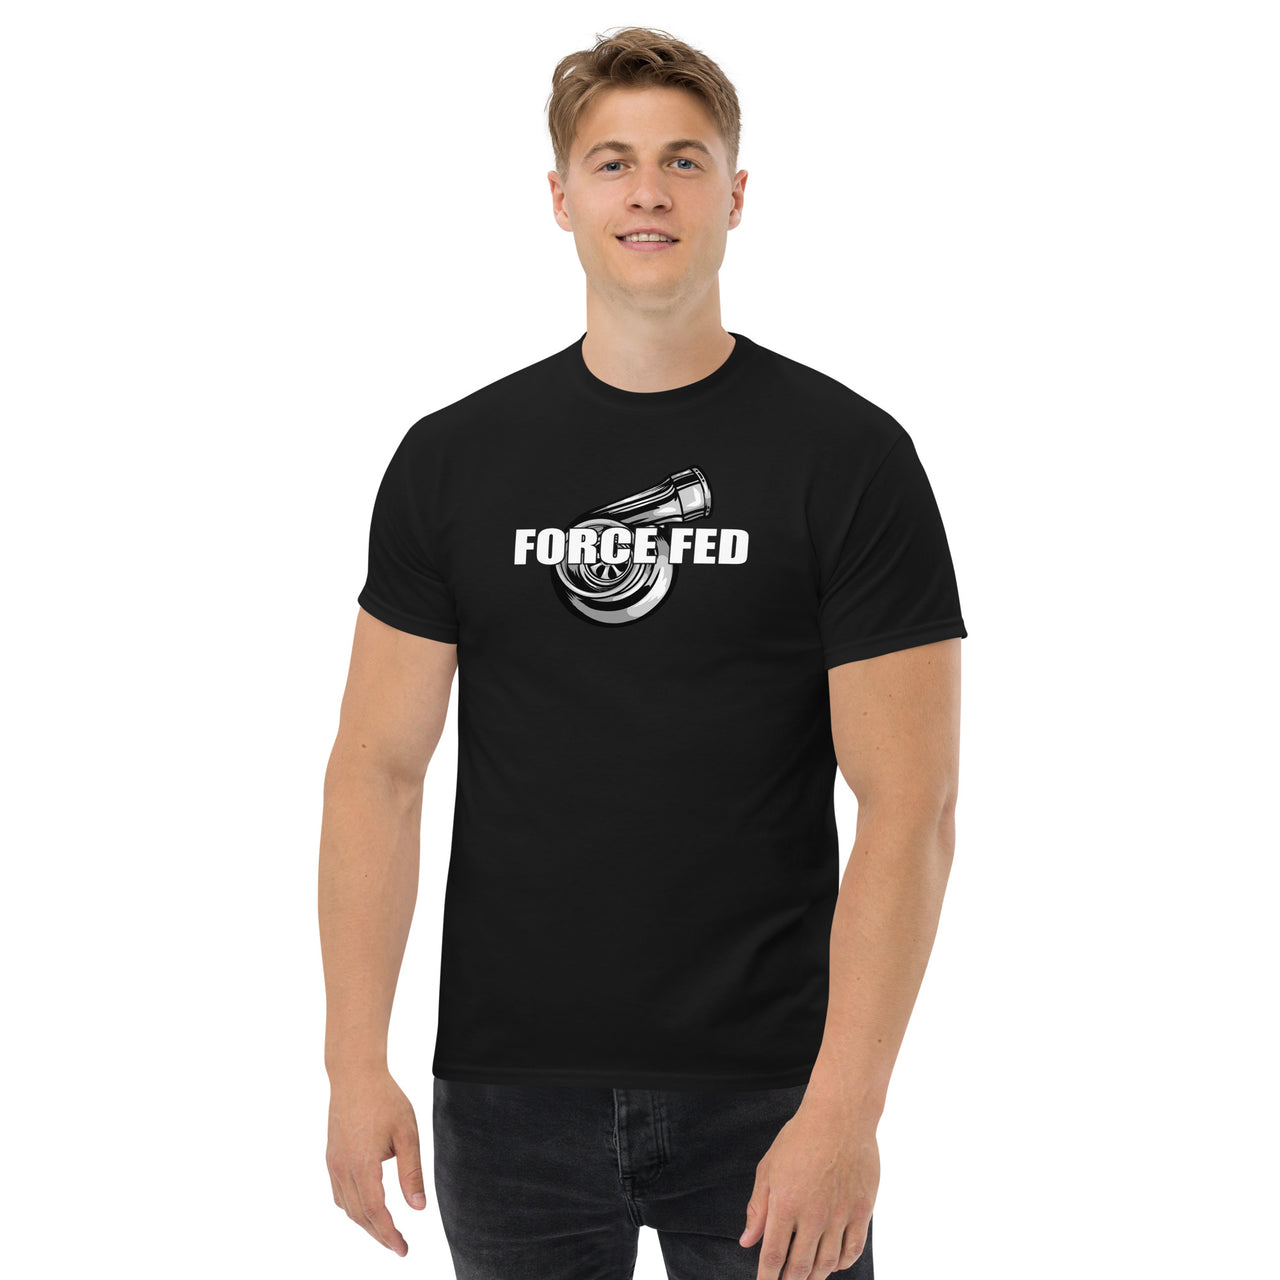 Force Fed T-Shirt - Car Guy Turbo Shirt in black